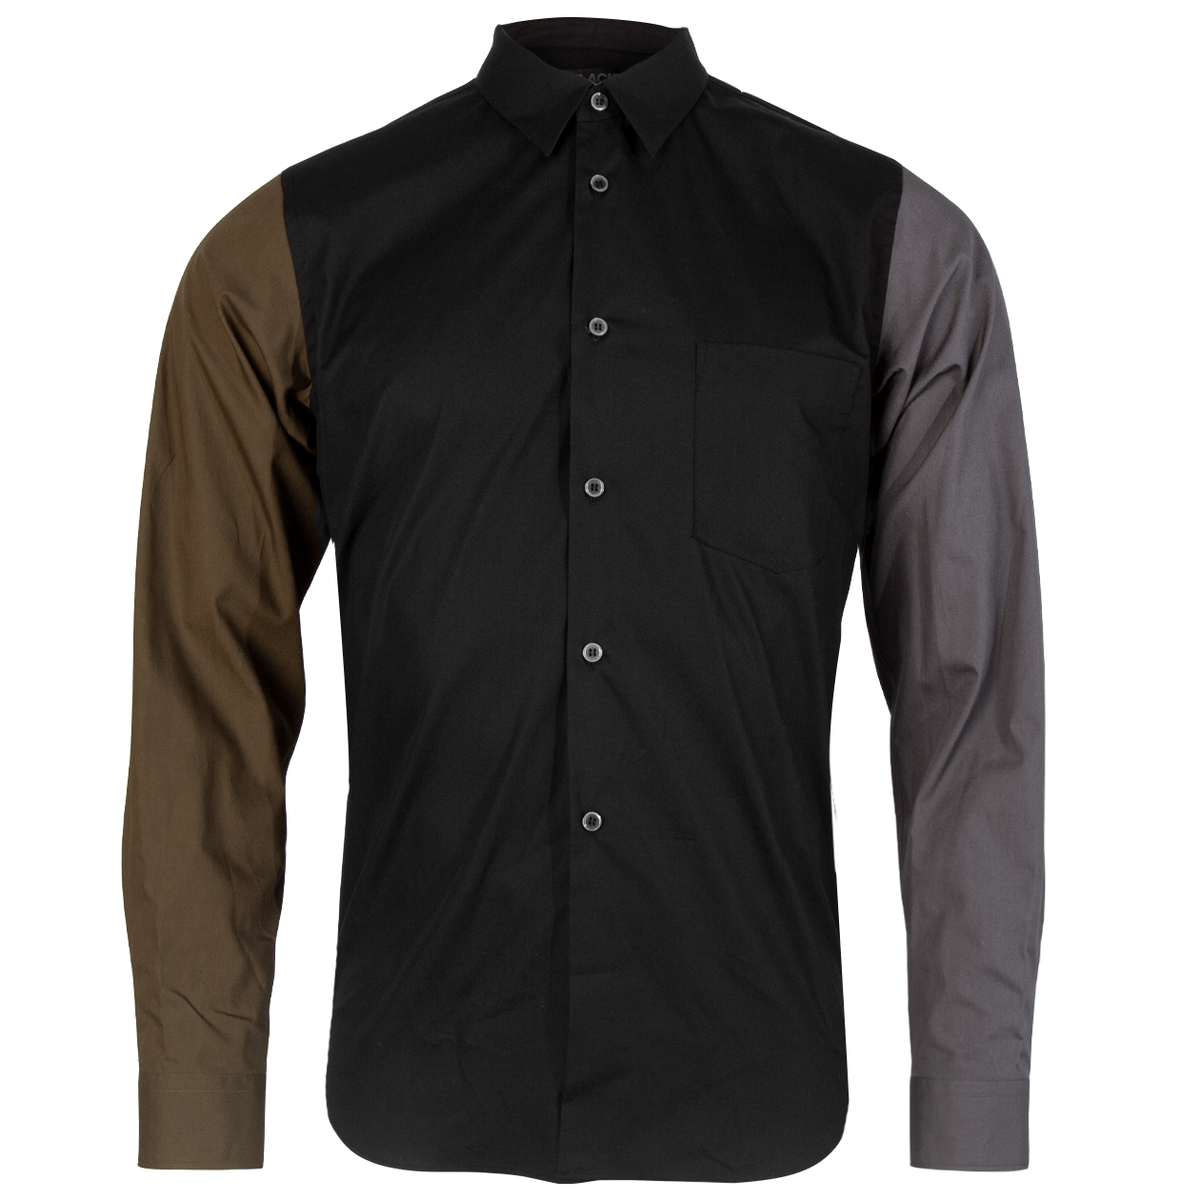 Contrast Sleeve Shirt S Black